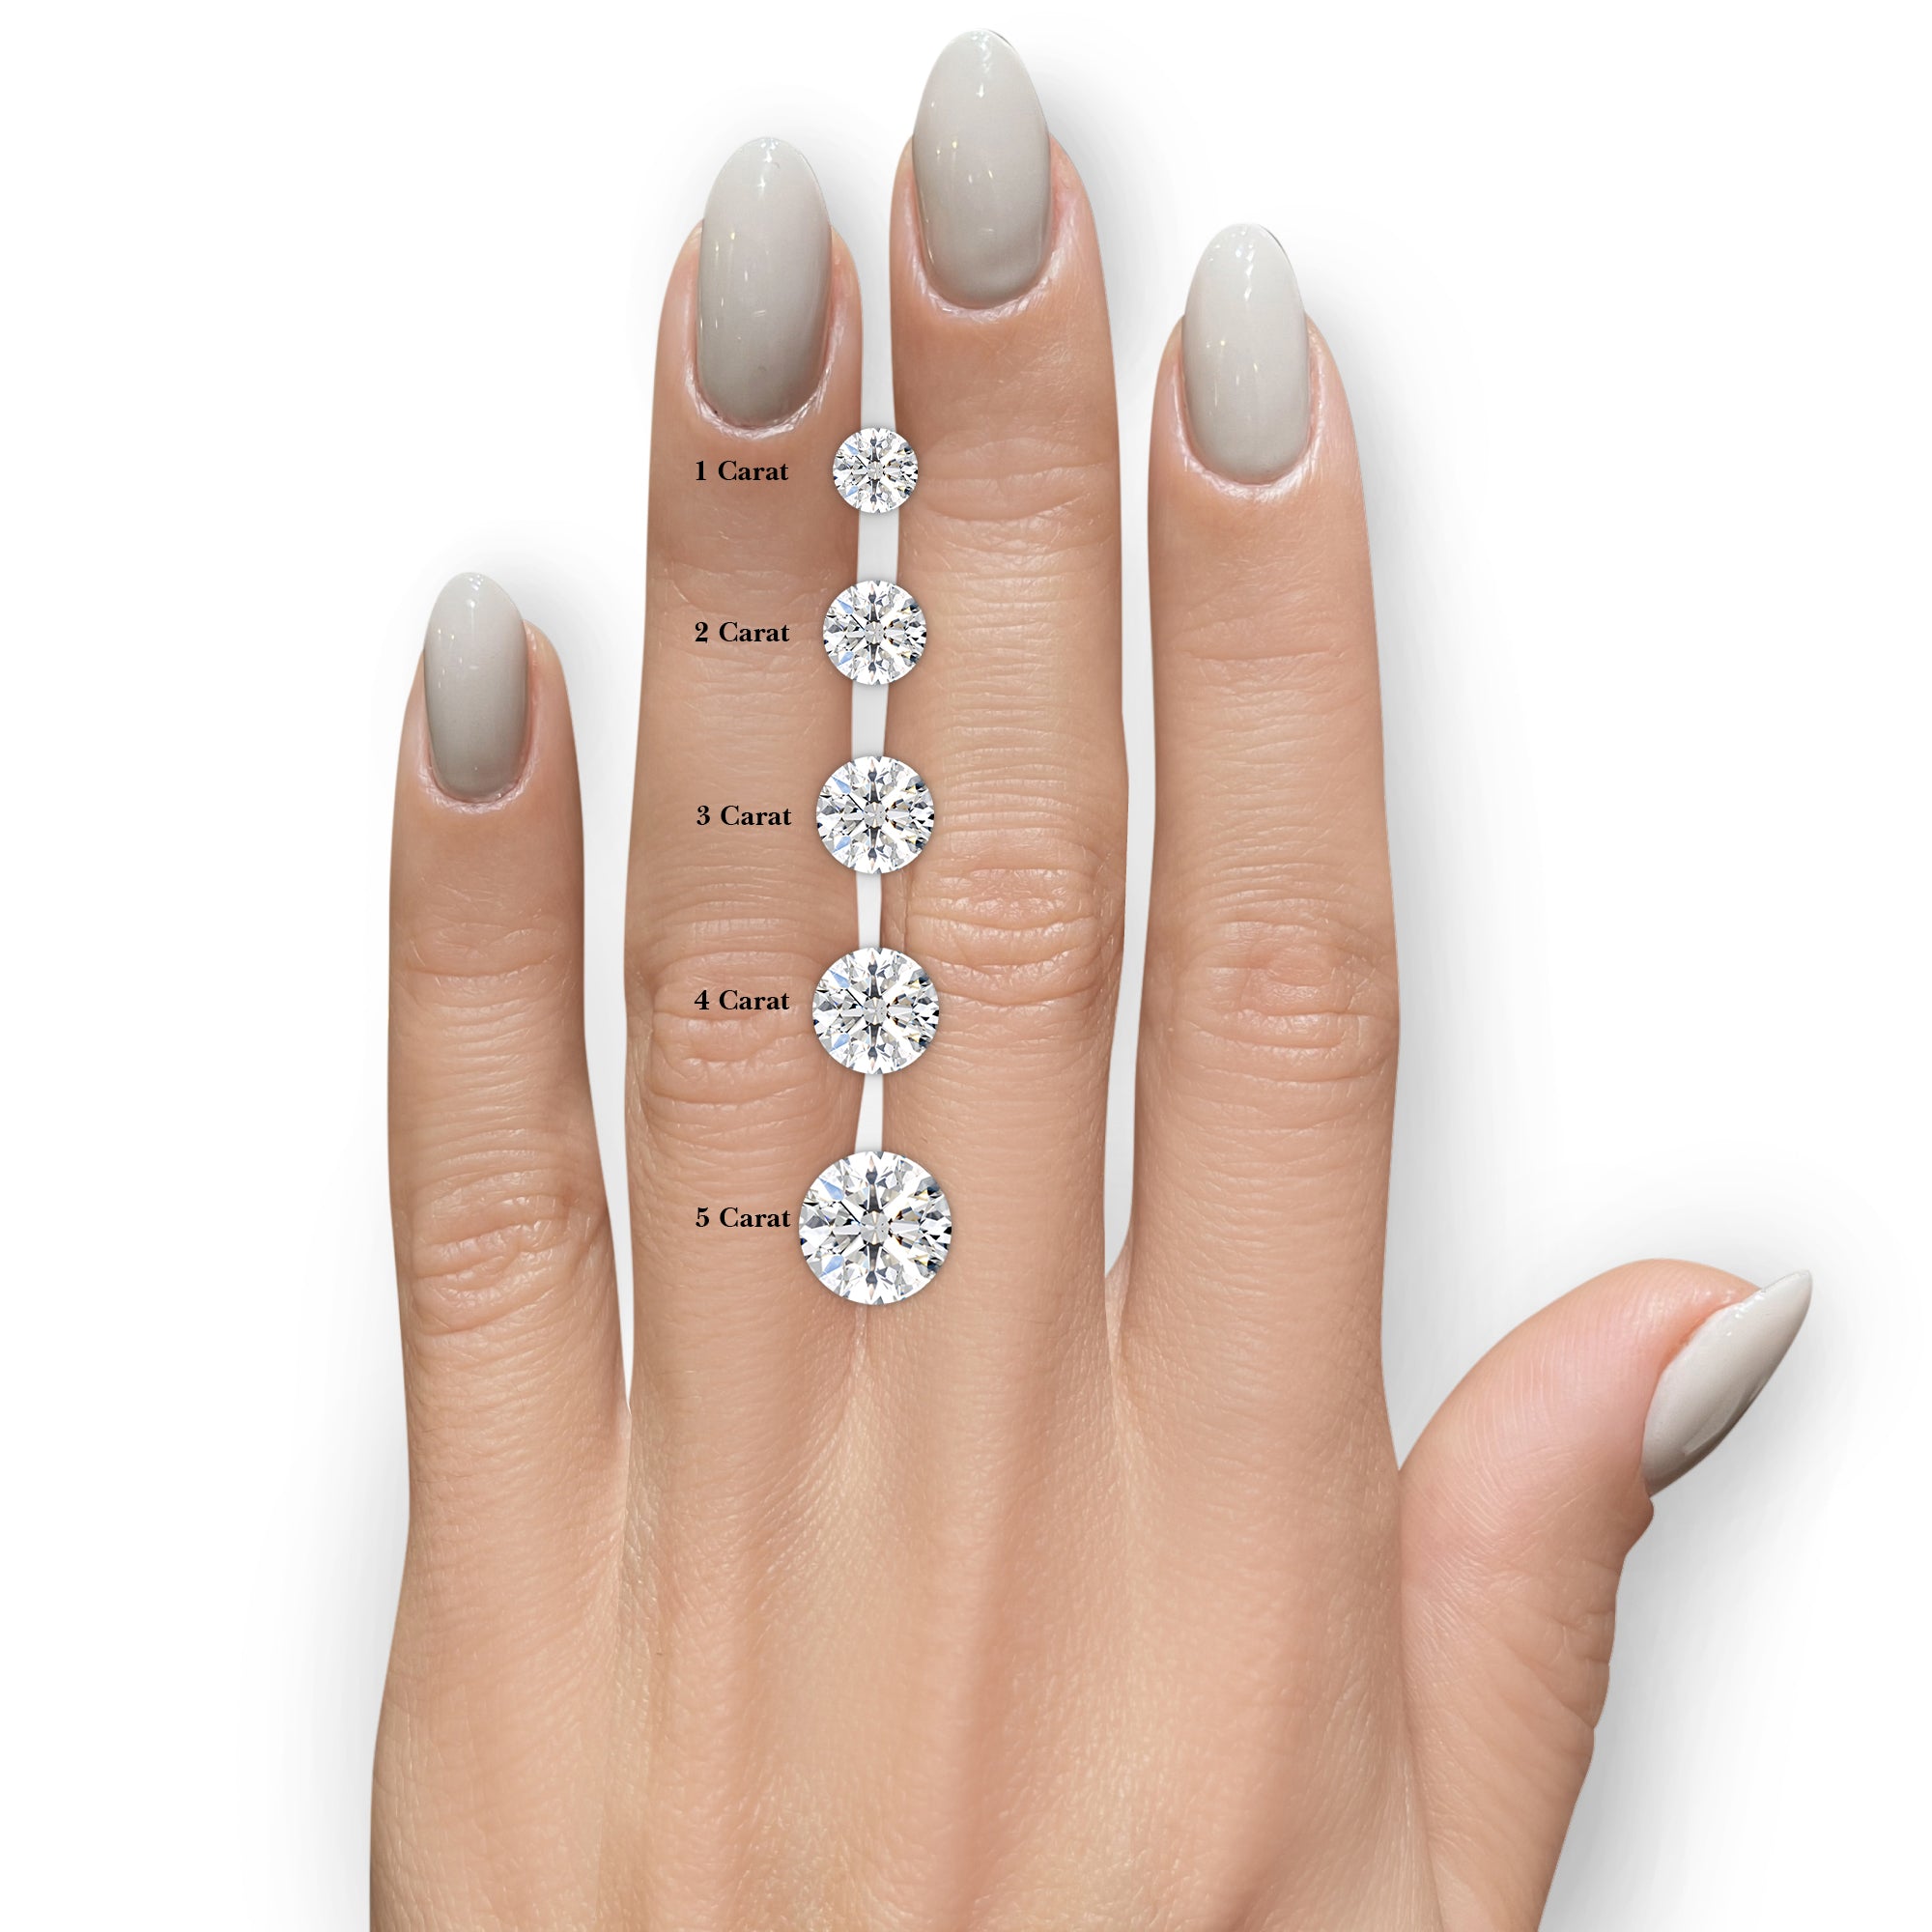 Anna Diamond Engagement Ring -18K White Gold